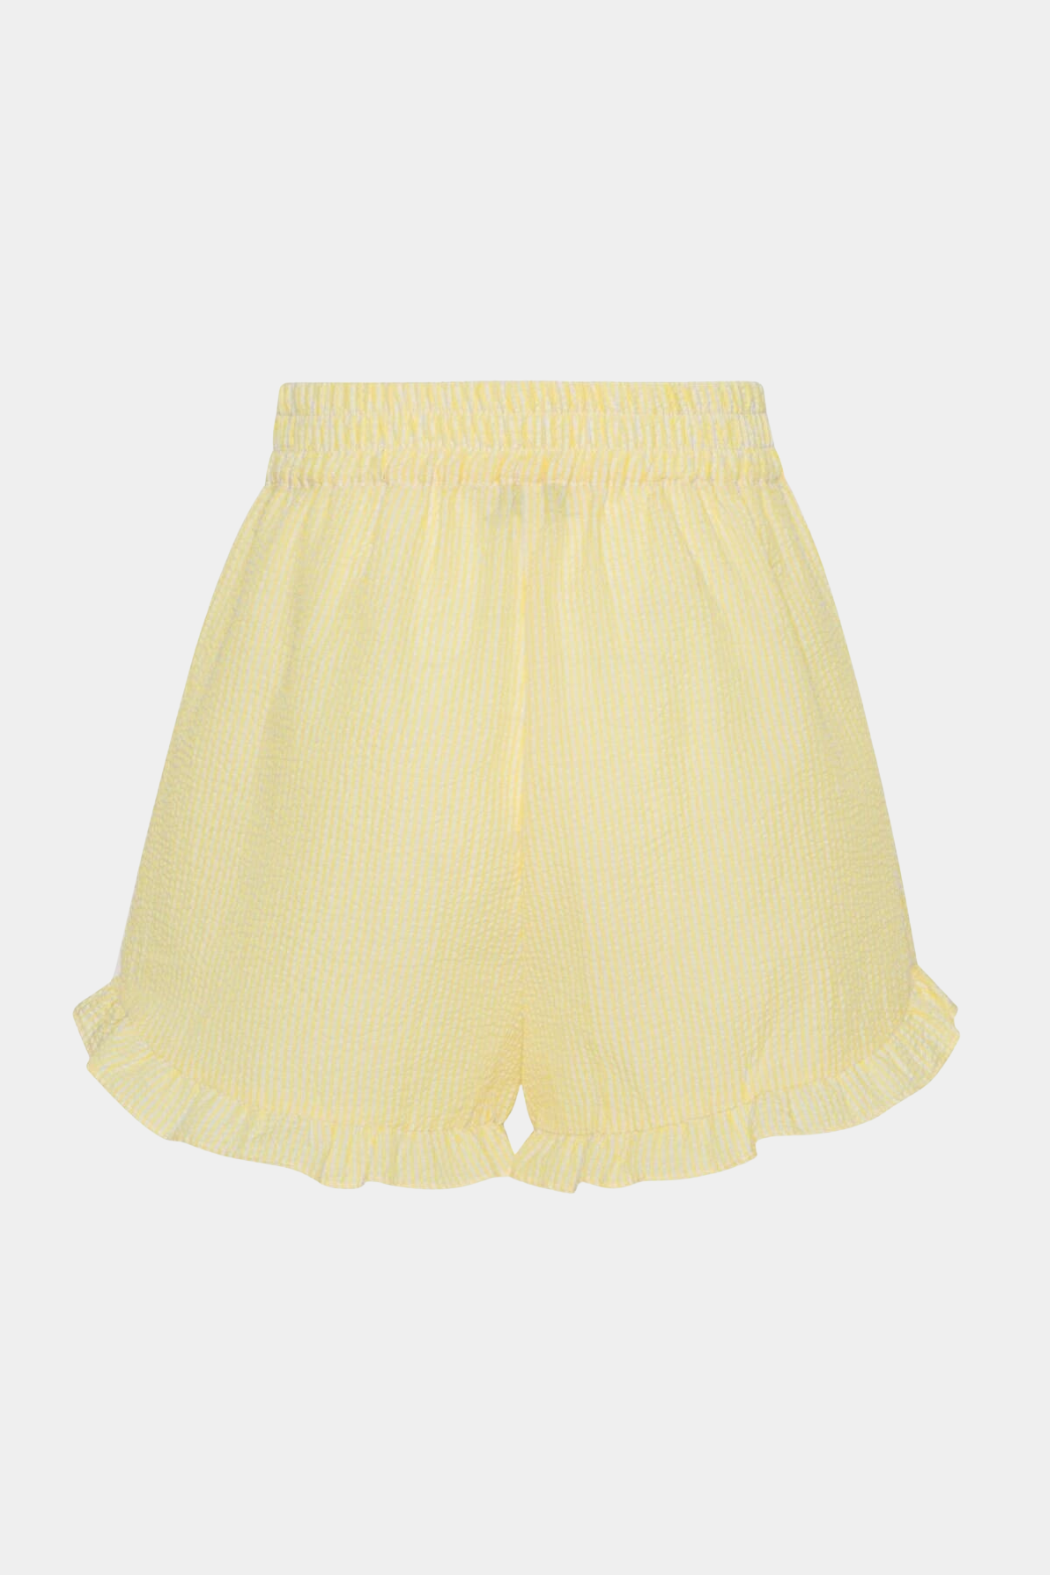 Sonja shorts, yellow/white